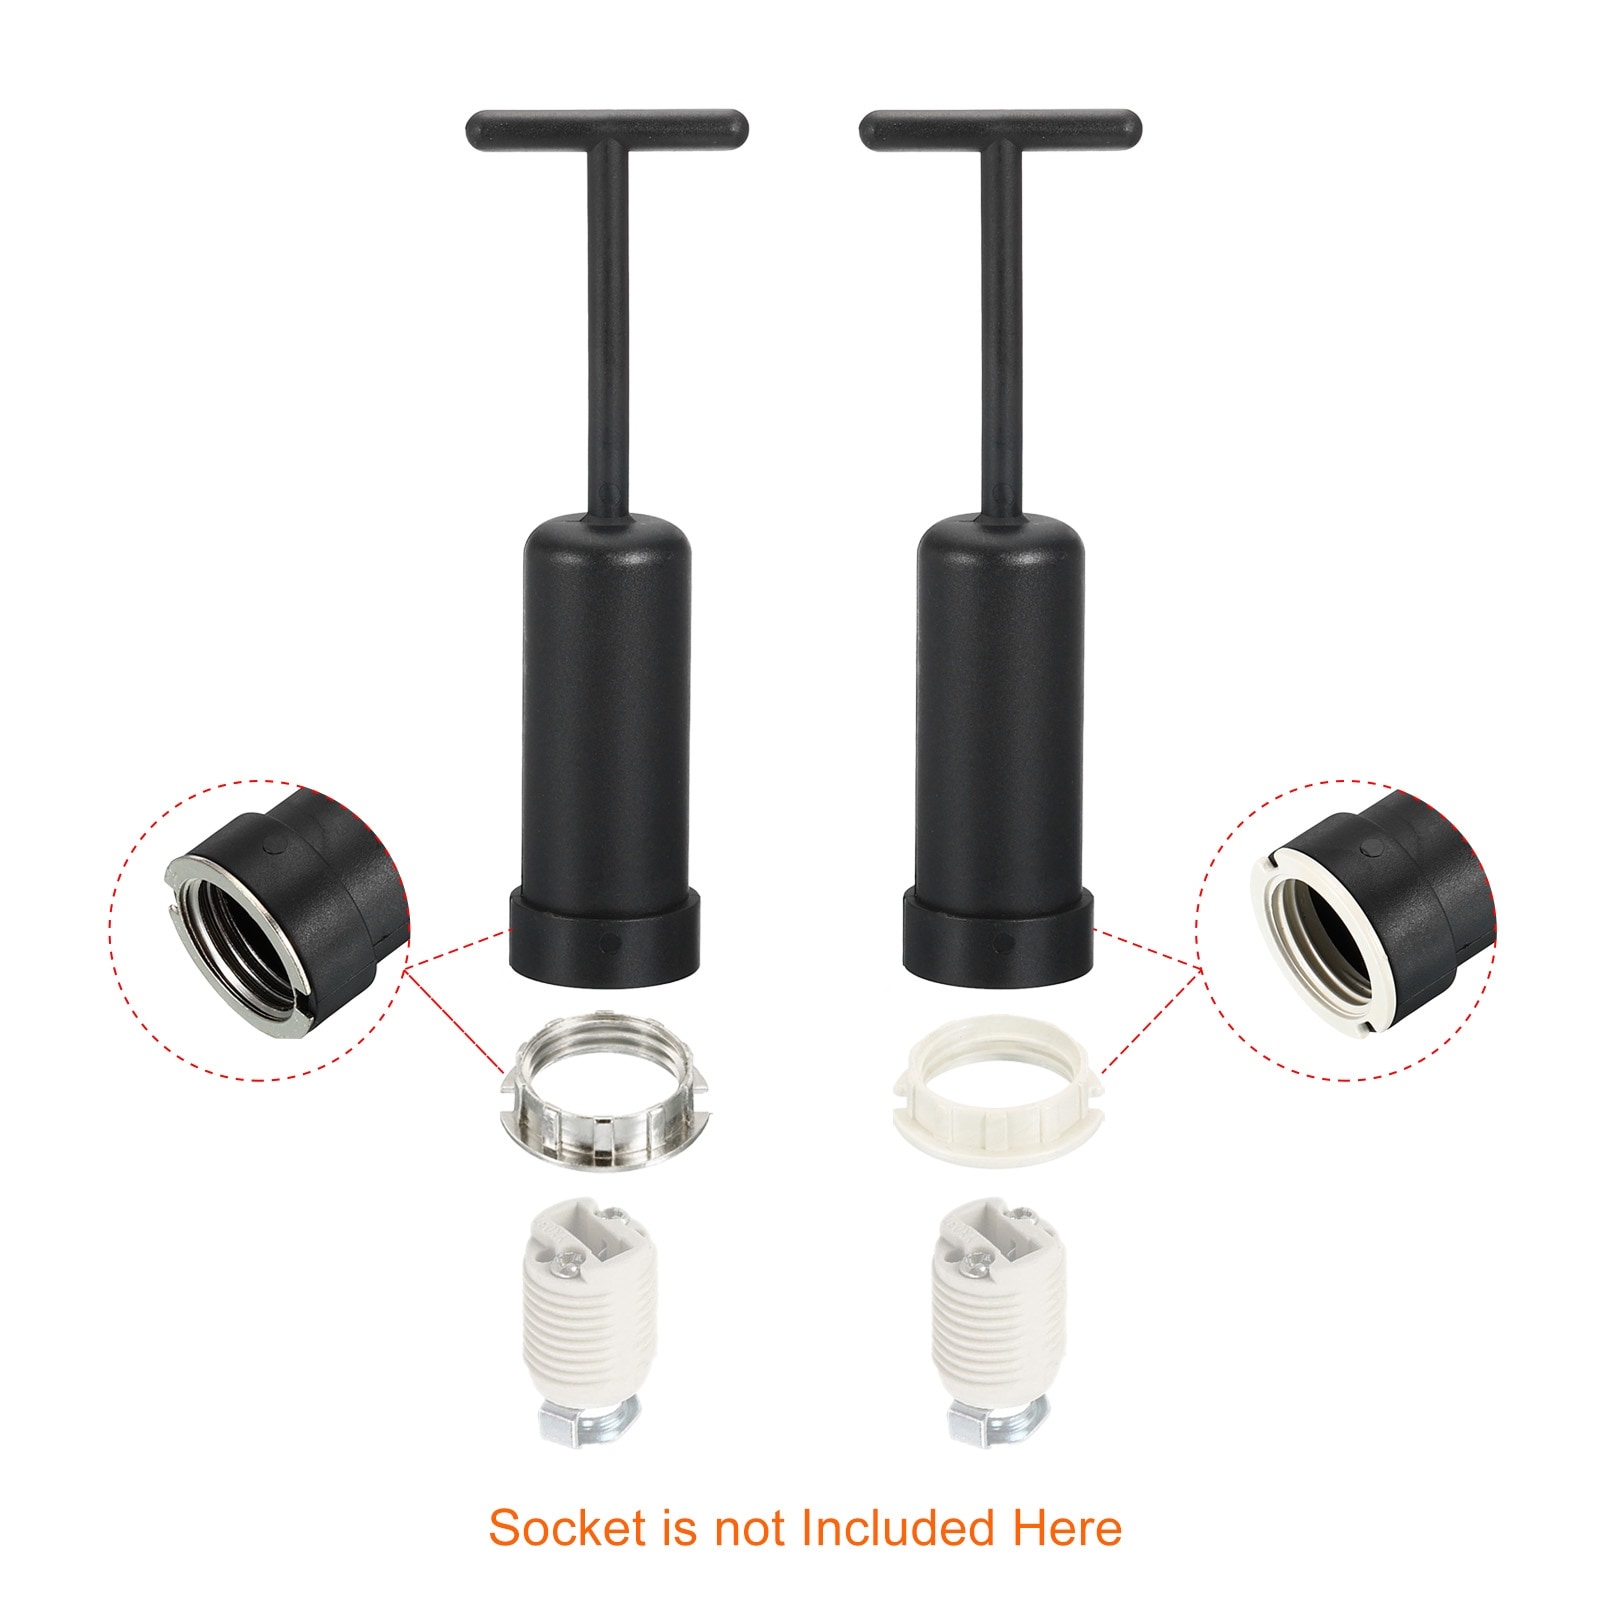 4pcs G9 Light Socket Ring Lamp Shade Holder Ring with 1pcs Removal Tool Set - Black, Silver Tone, White